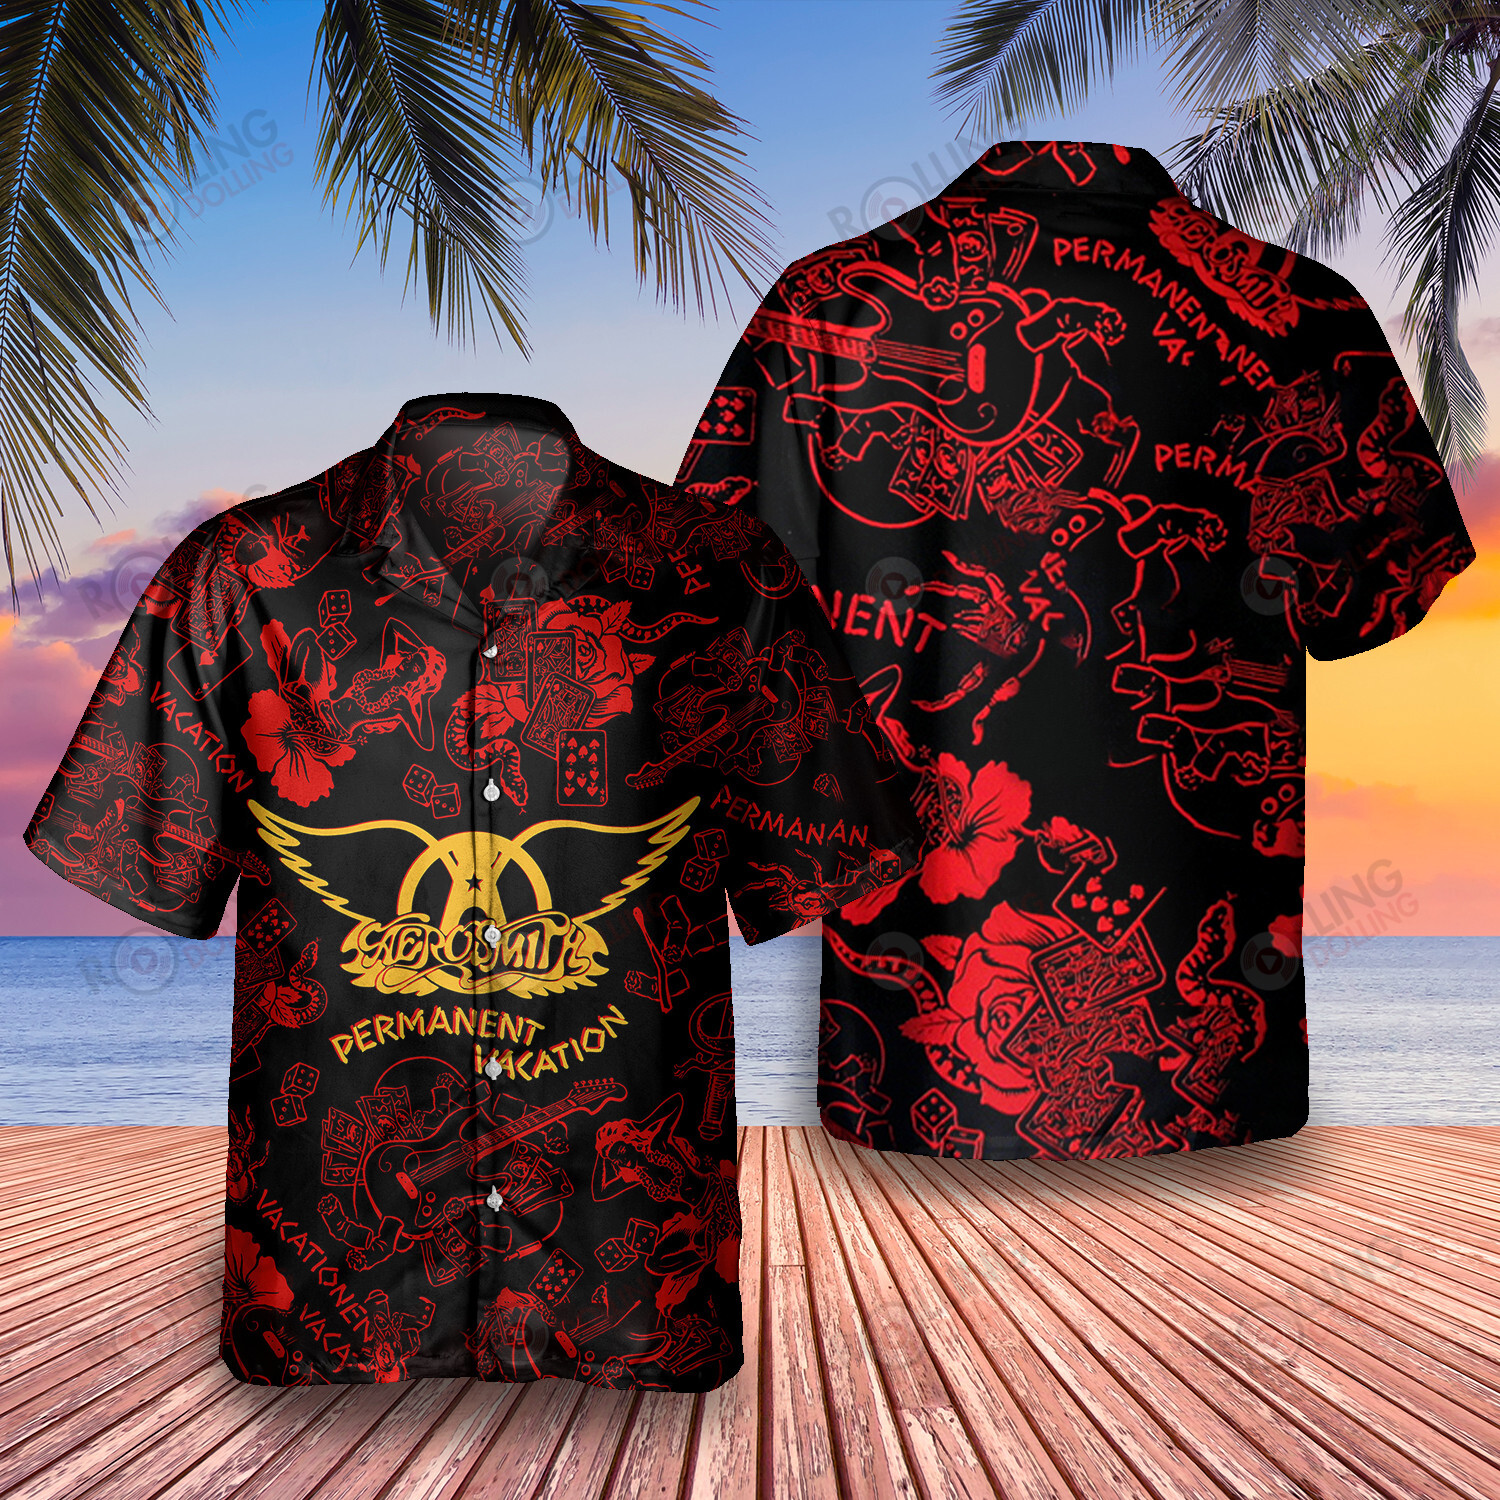 Regardless of their style, you will feel comfortable wearing Hawaiian Shirt 79